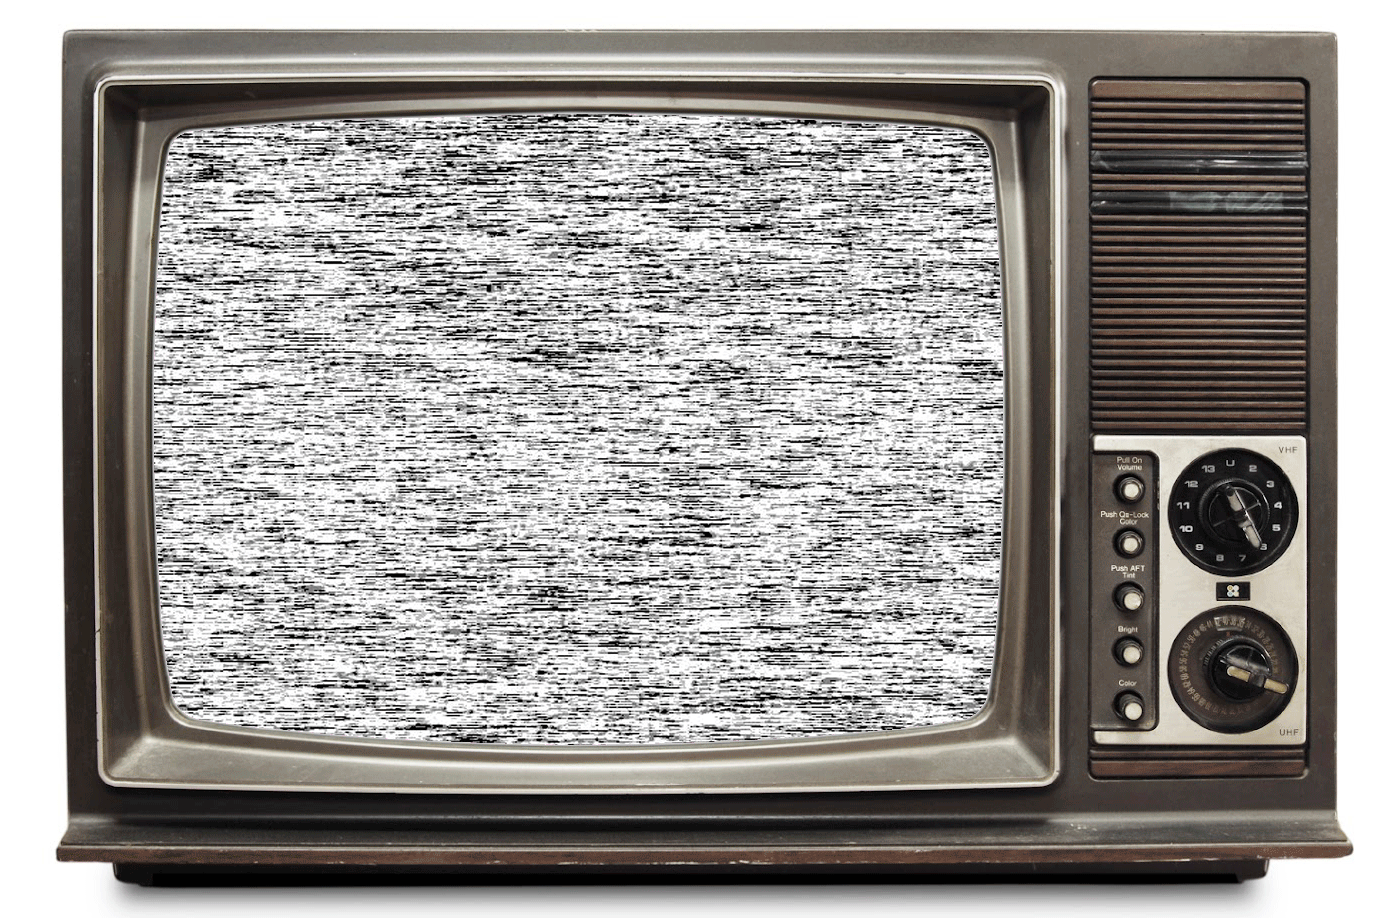 Ламповый телевизор сигнал 2. Старый телевизор. Старинный телевизор. Экран старого телевизора. Tv old 2